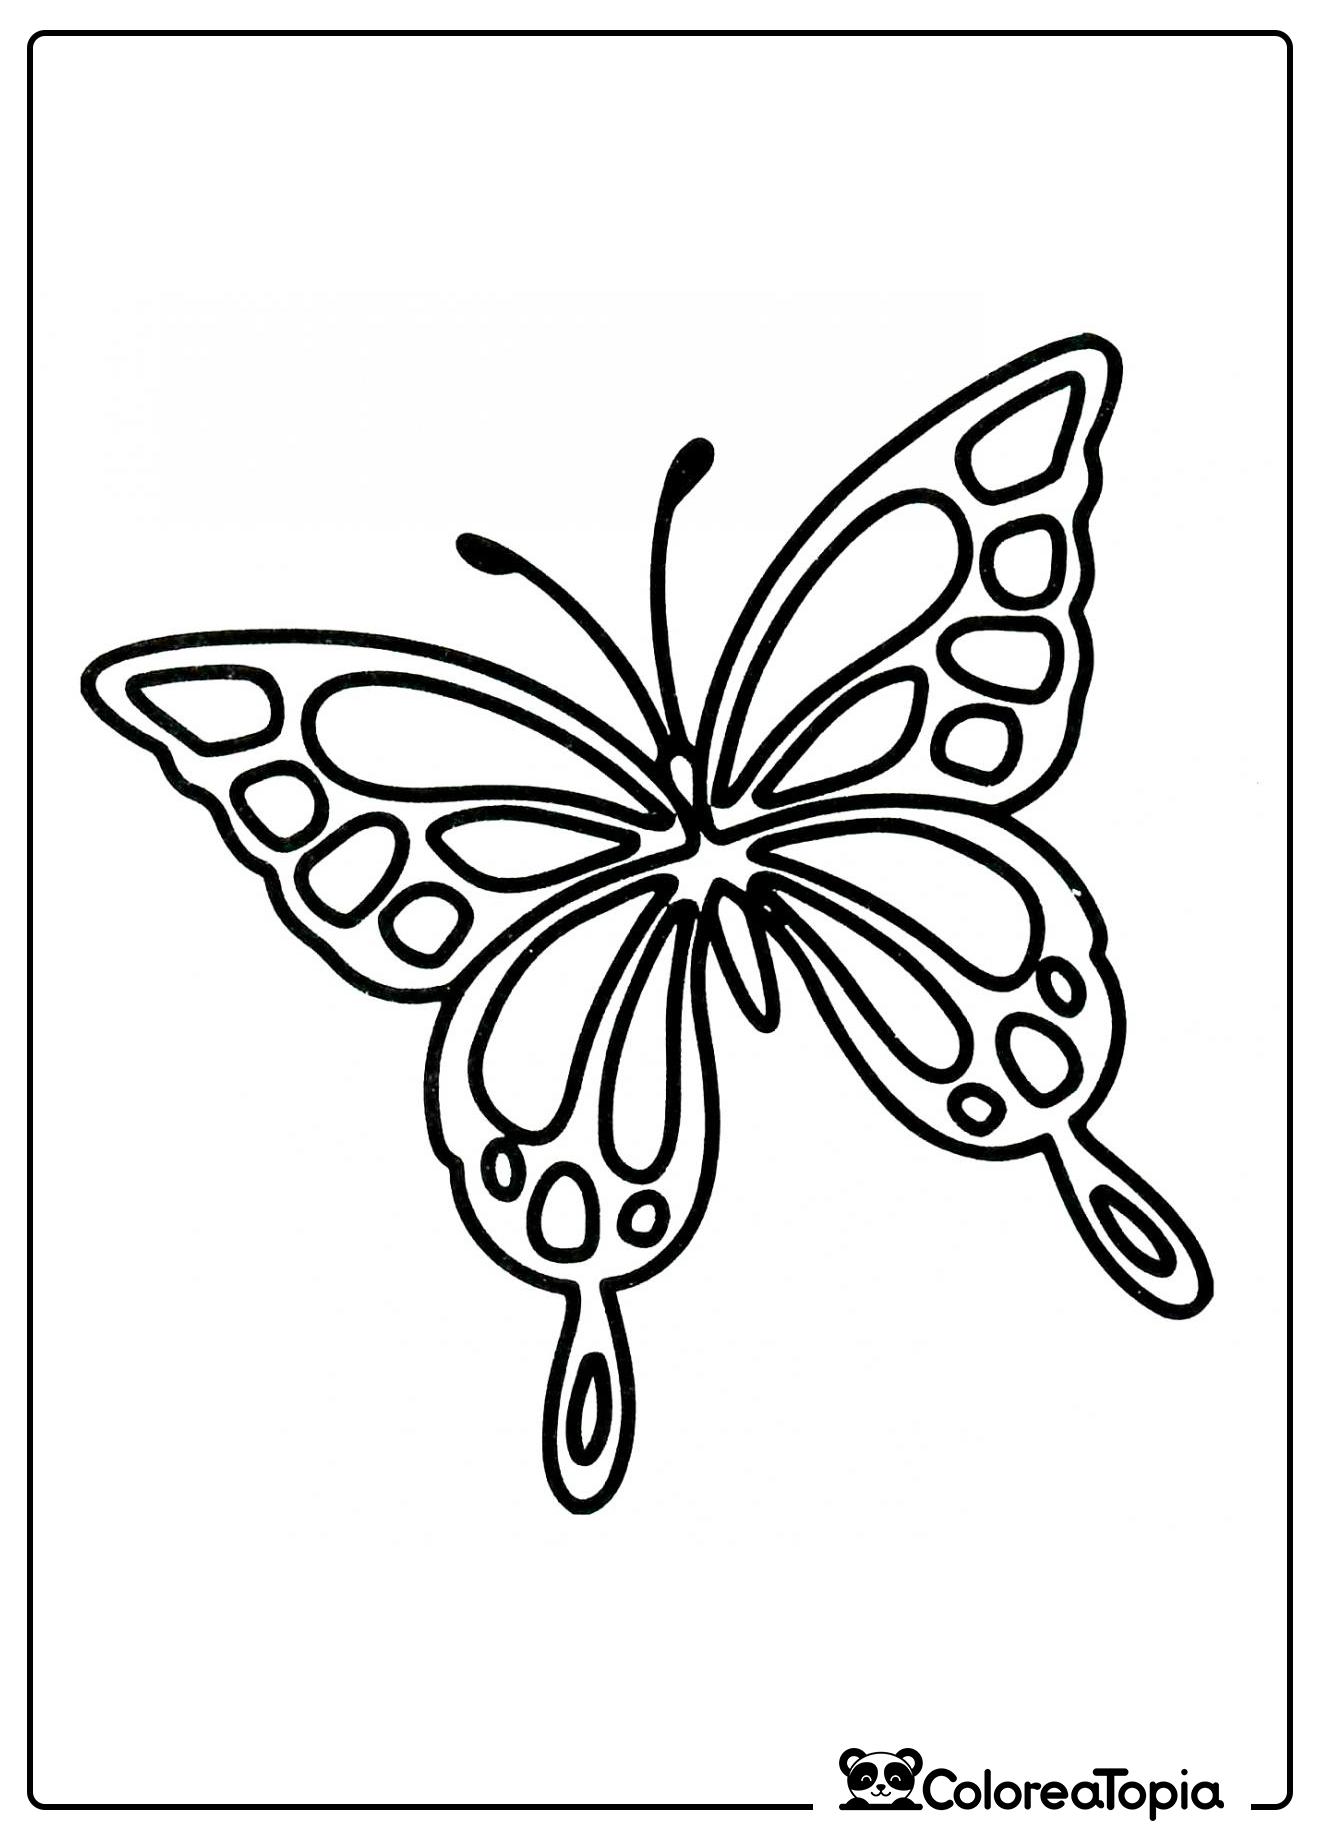 Mariposa multicolor - dibujo para colorear